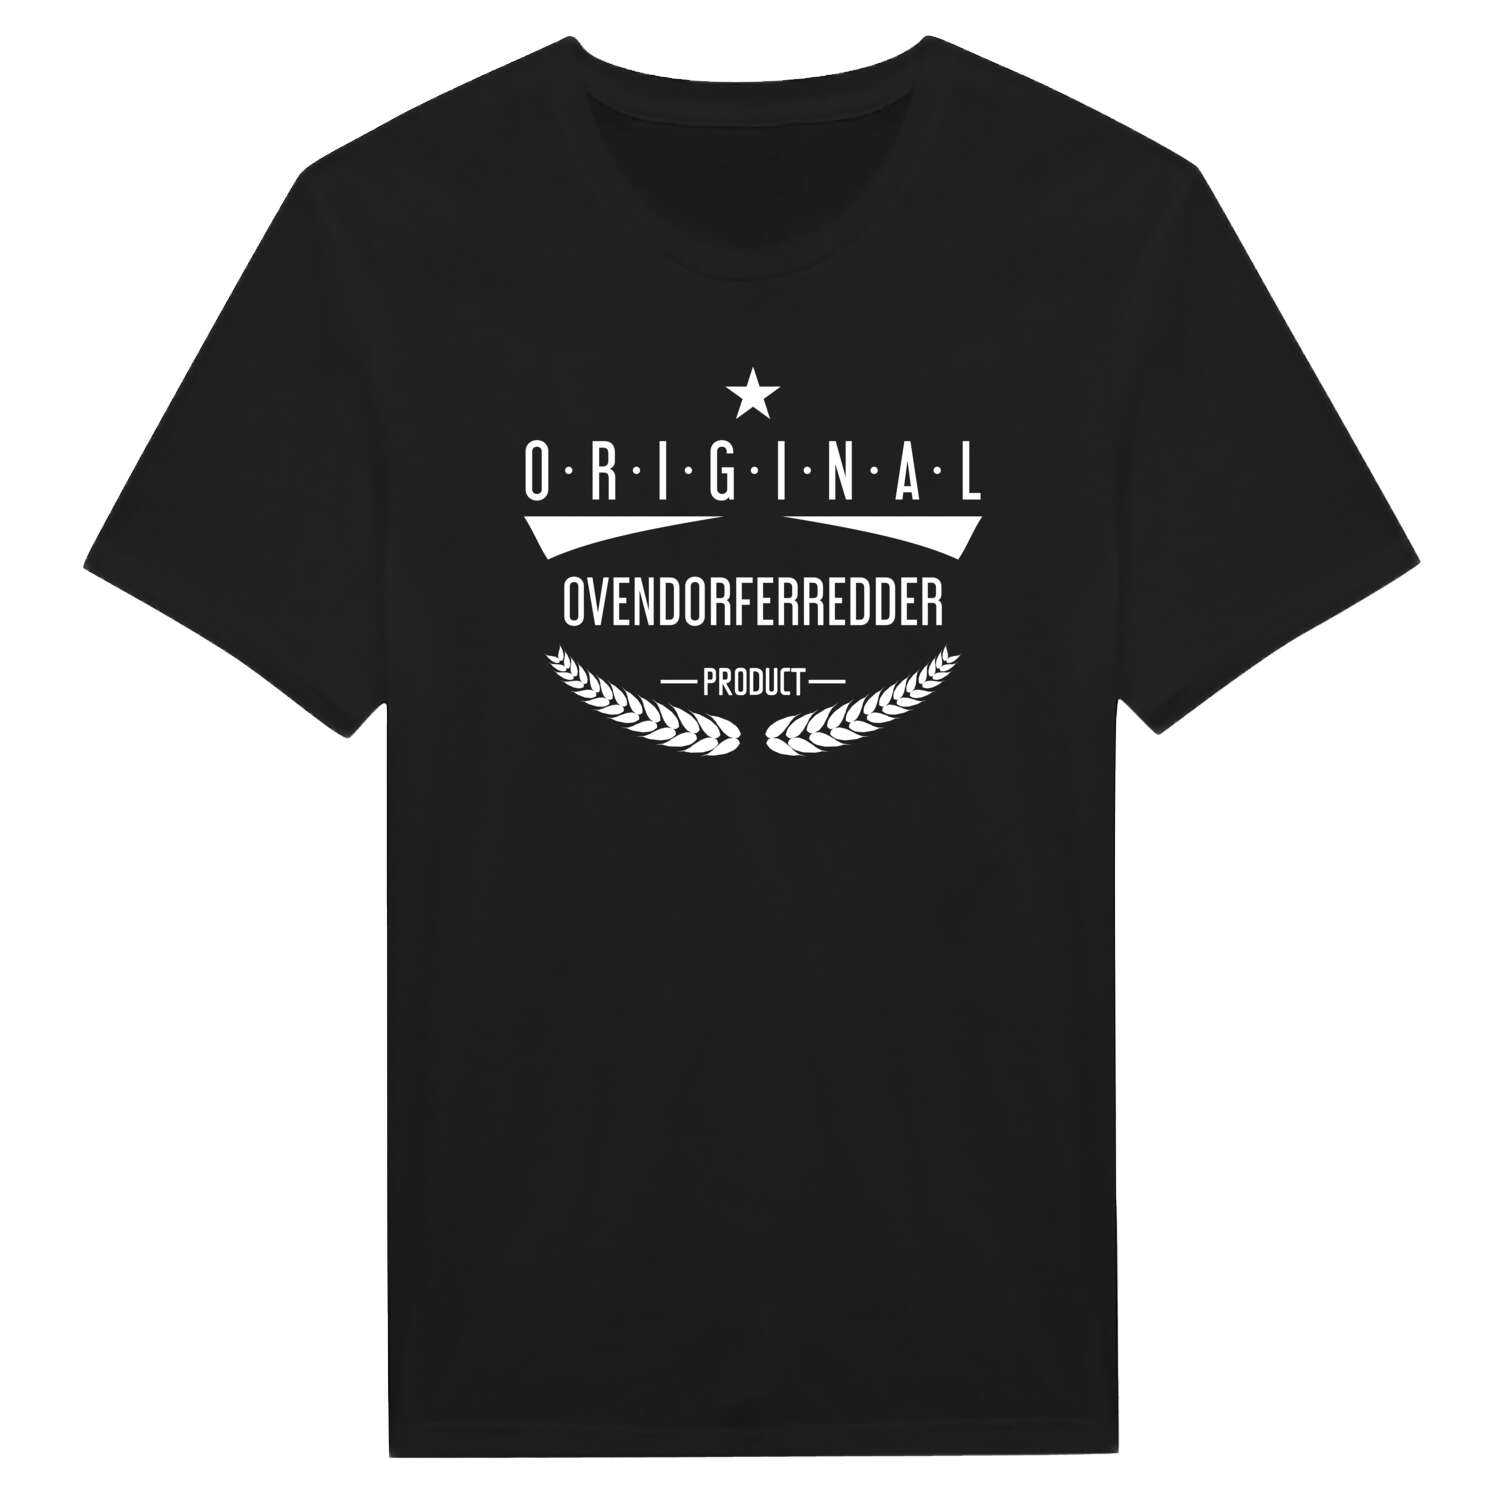 Ovendorferredder T-Shirt »Original Product«